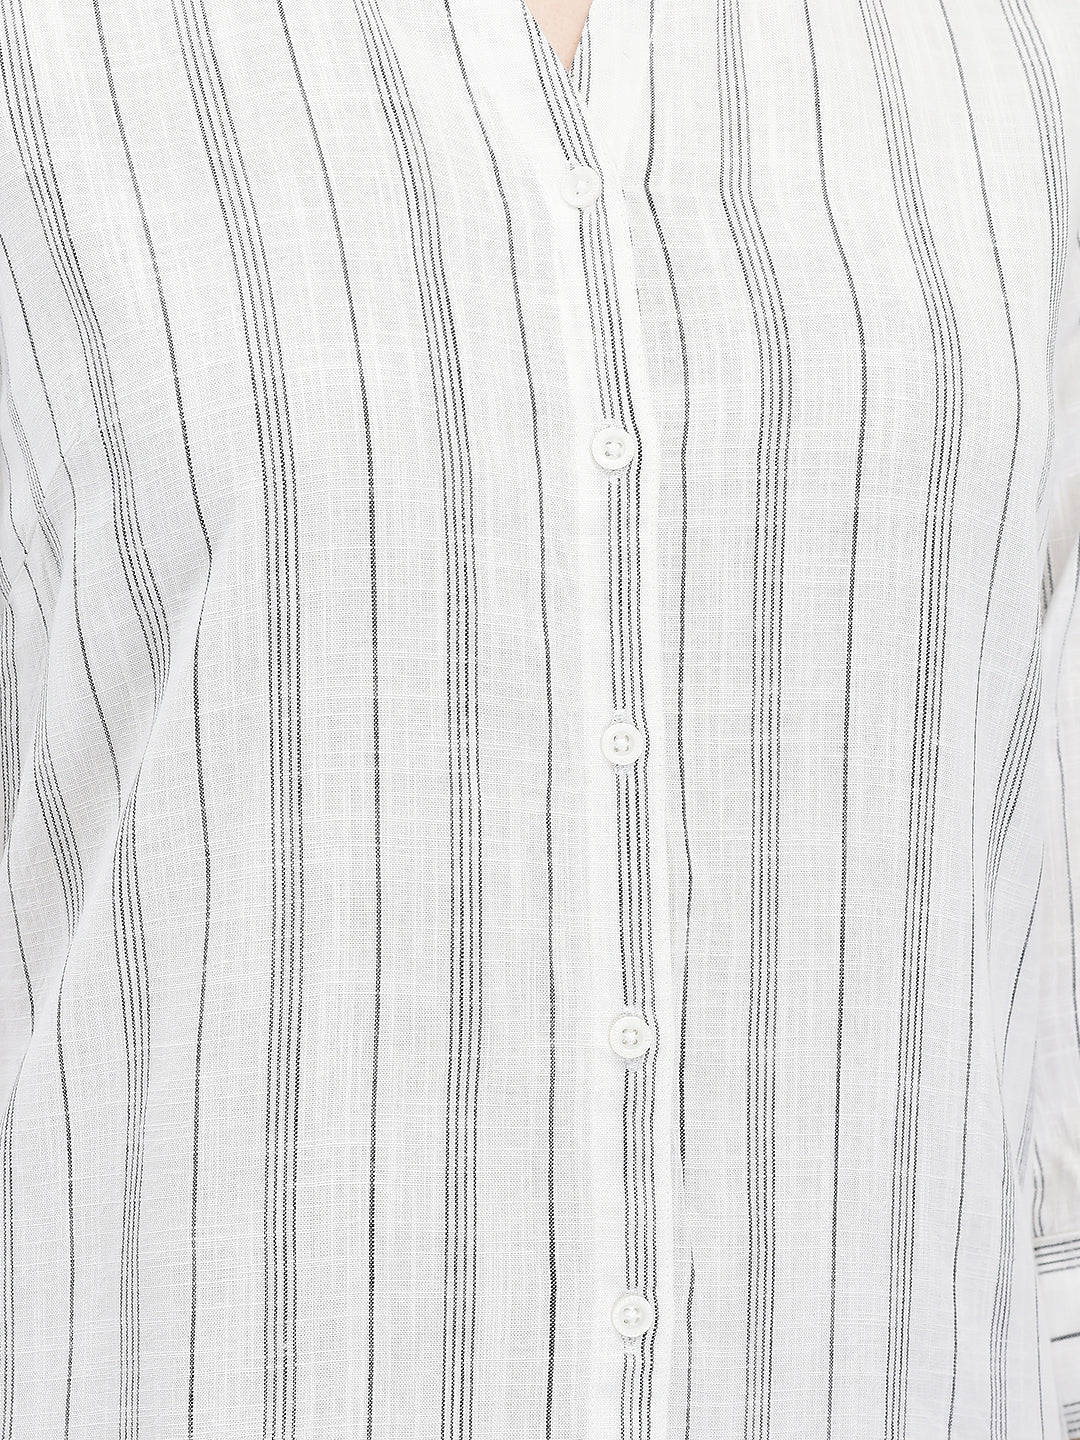 Vertical Striped White Shirt